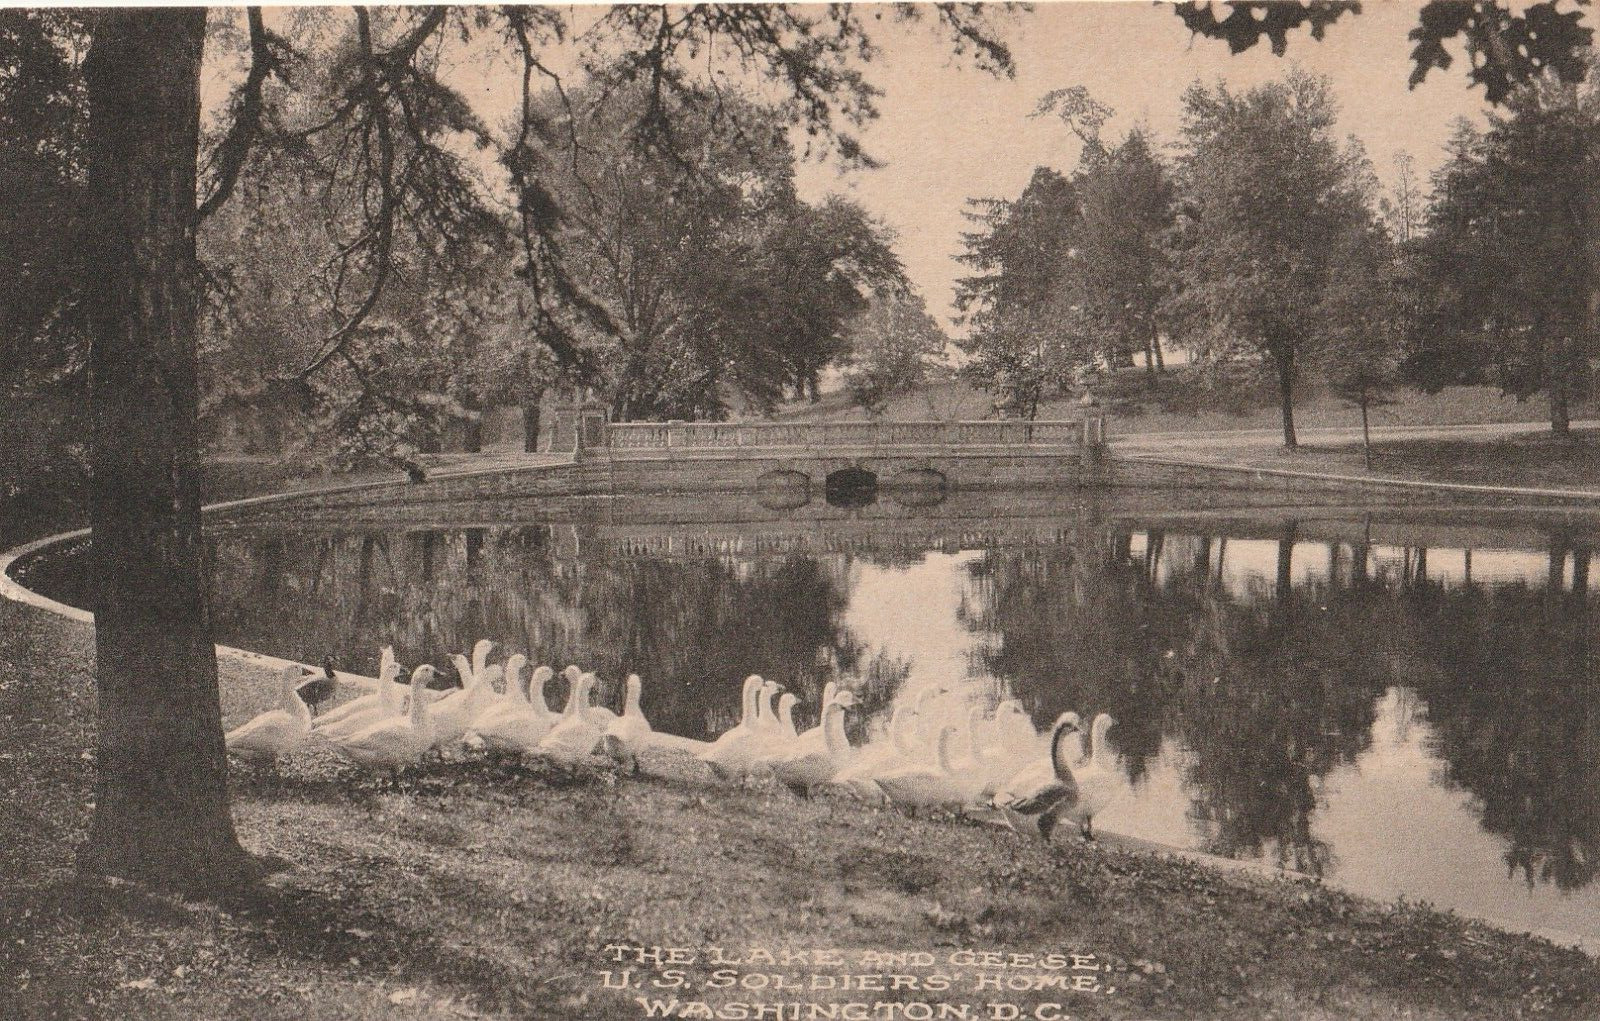 Vintage Postcard The Lake and Geese U.S. Soldier's Home Washington, DC B&W Photo